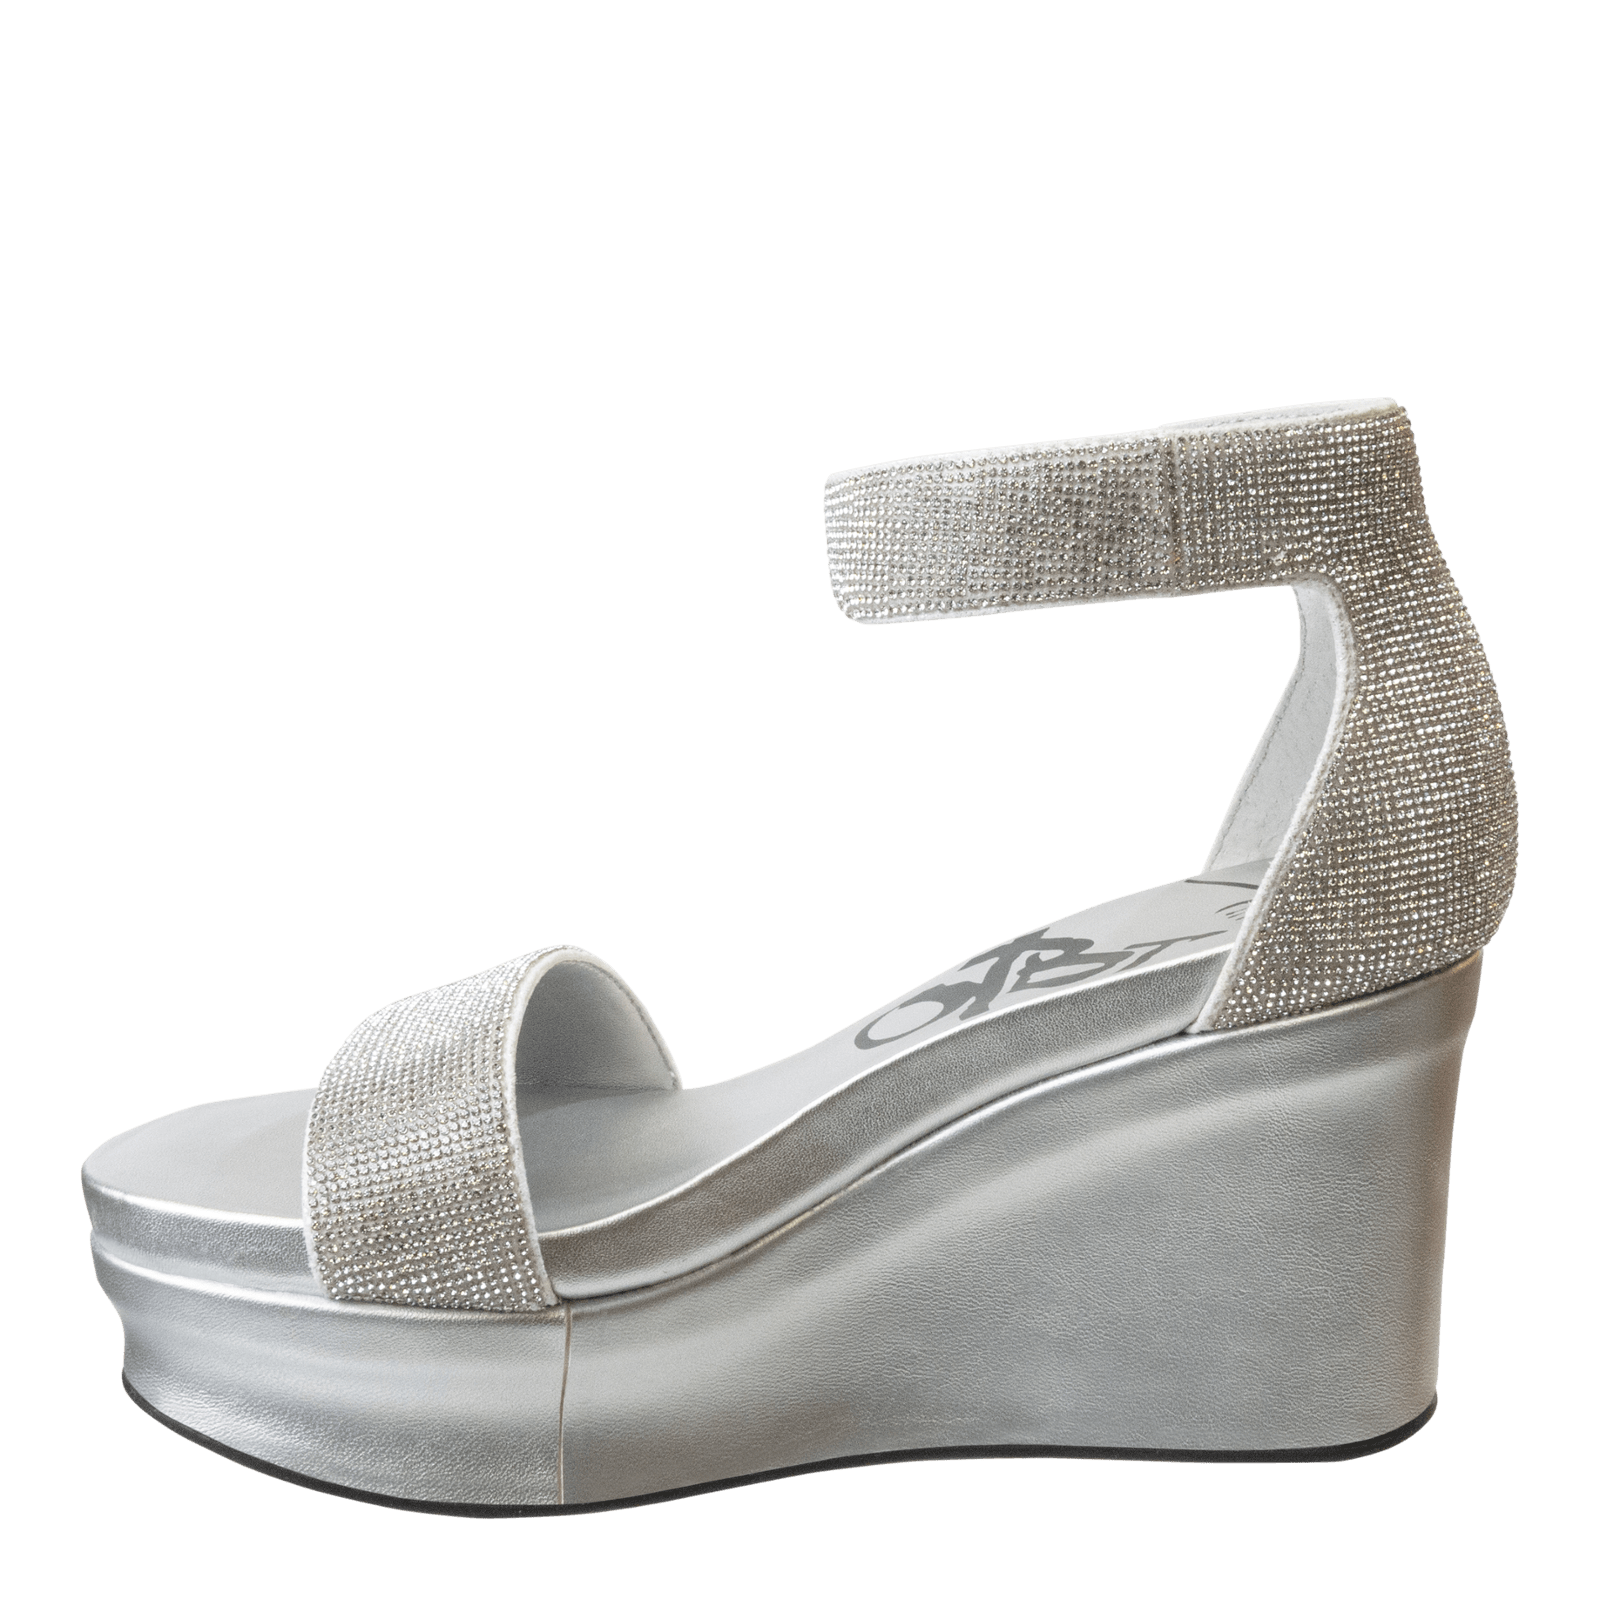 Buy Ravel ladies' Etna espadrille wedge sandals online in tan